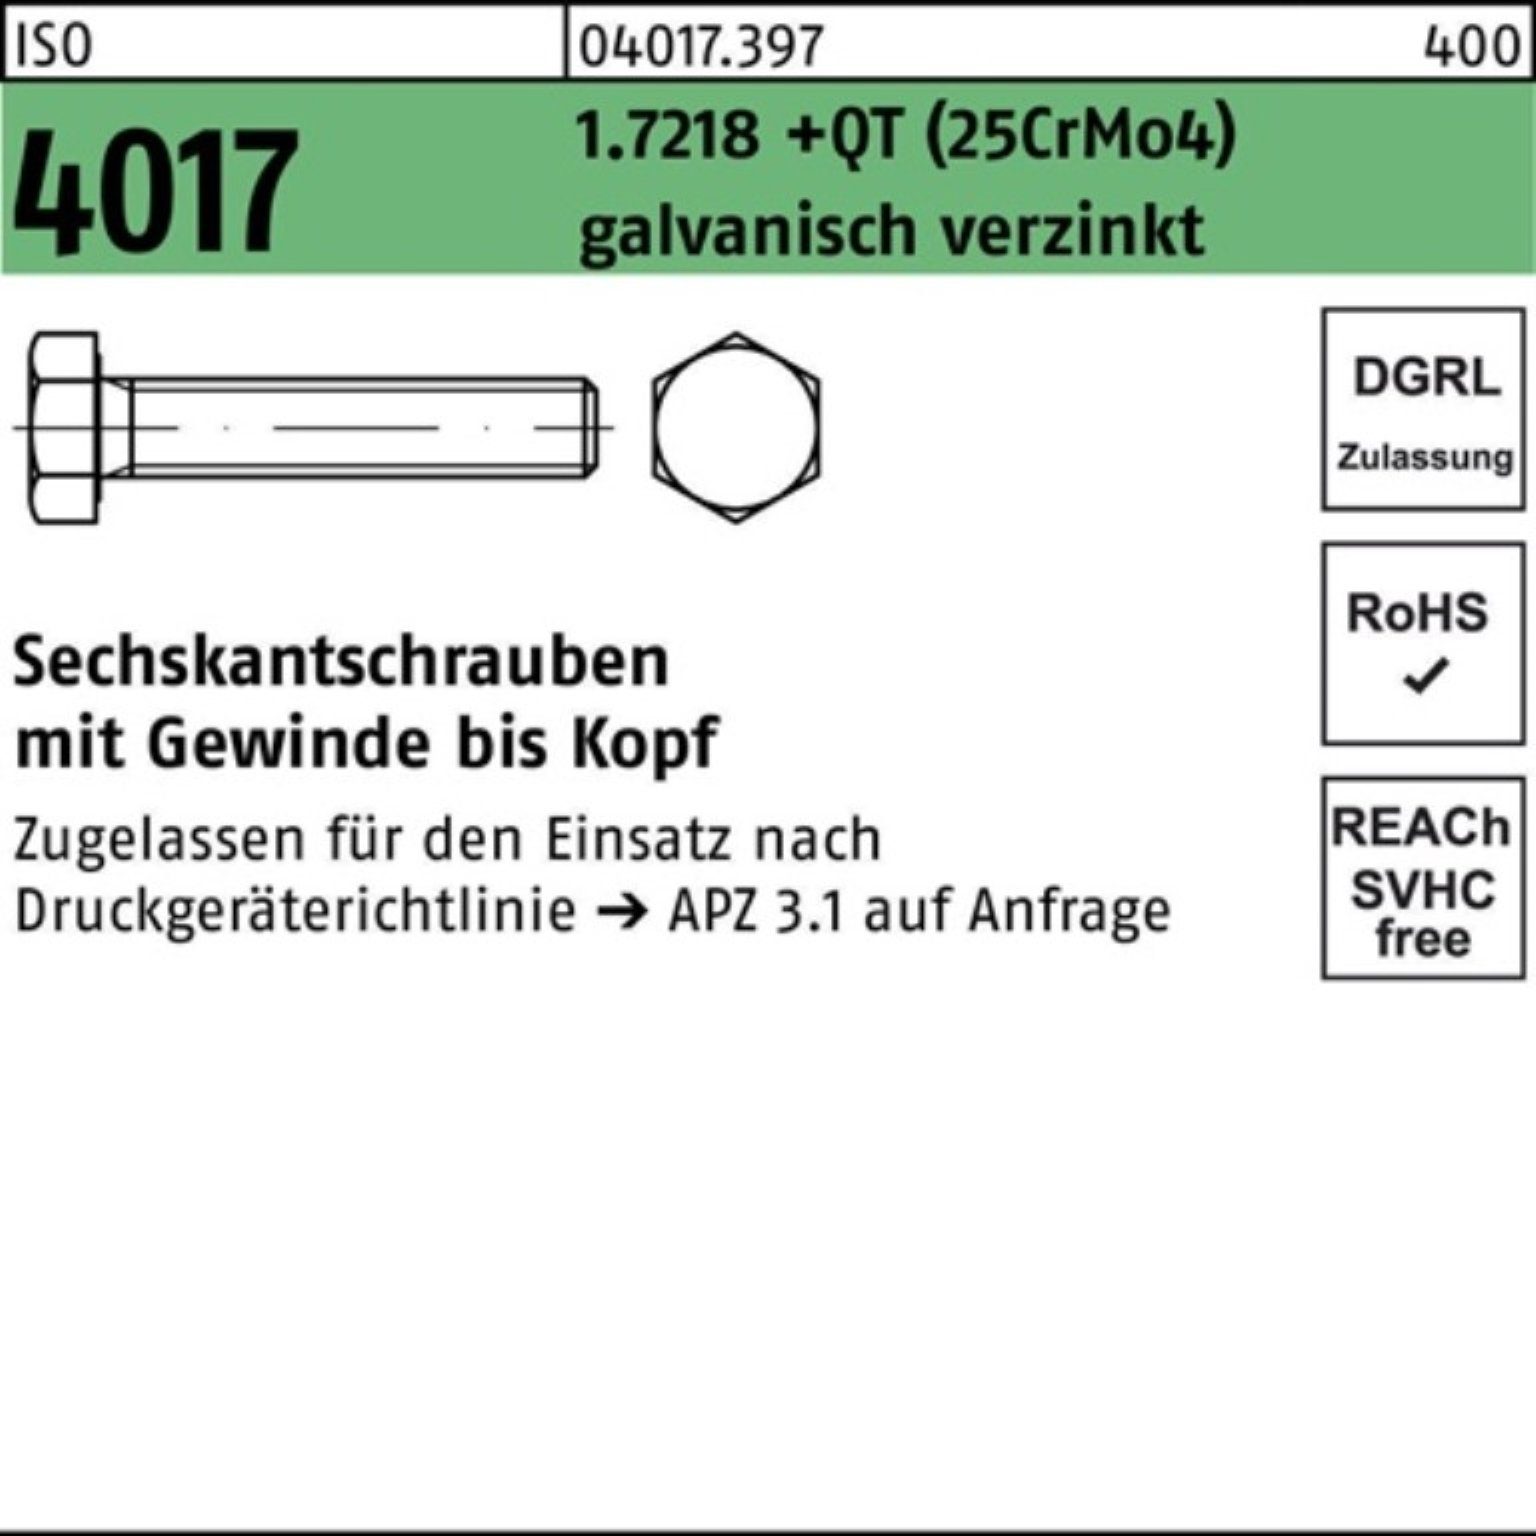 Bufab Sechskantschraube 100er VG Pack +QT g 1.7218 M24x45 ISO 4017 Sechskantschraube (25CrMo4)